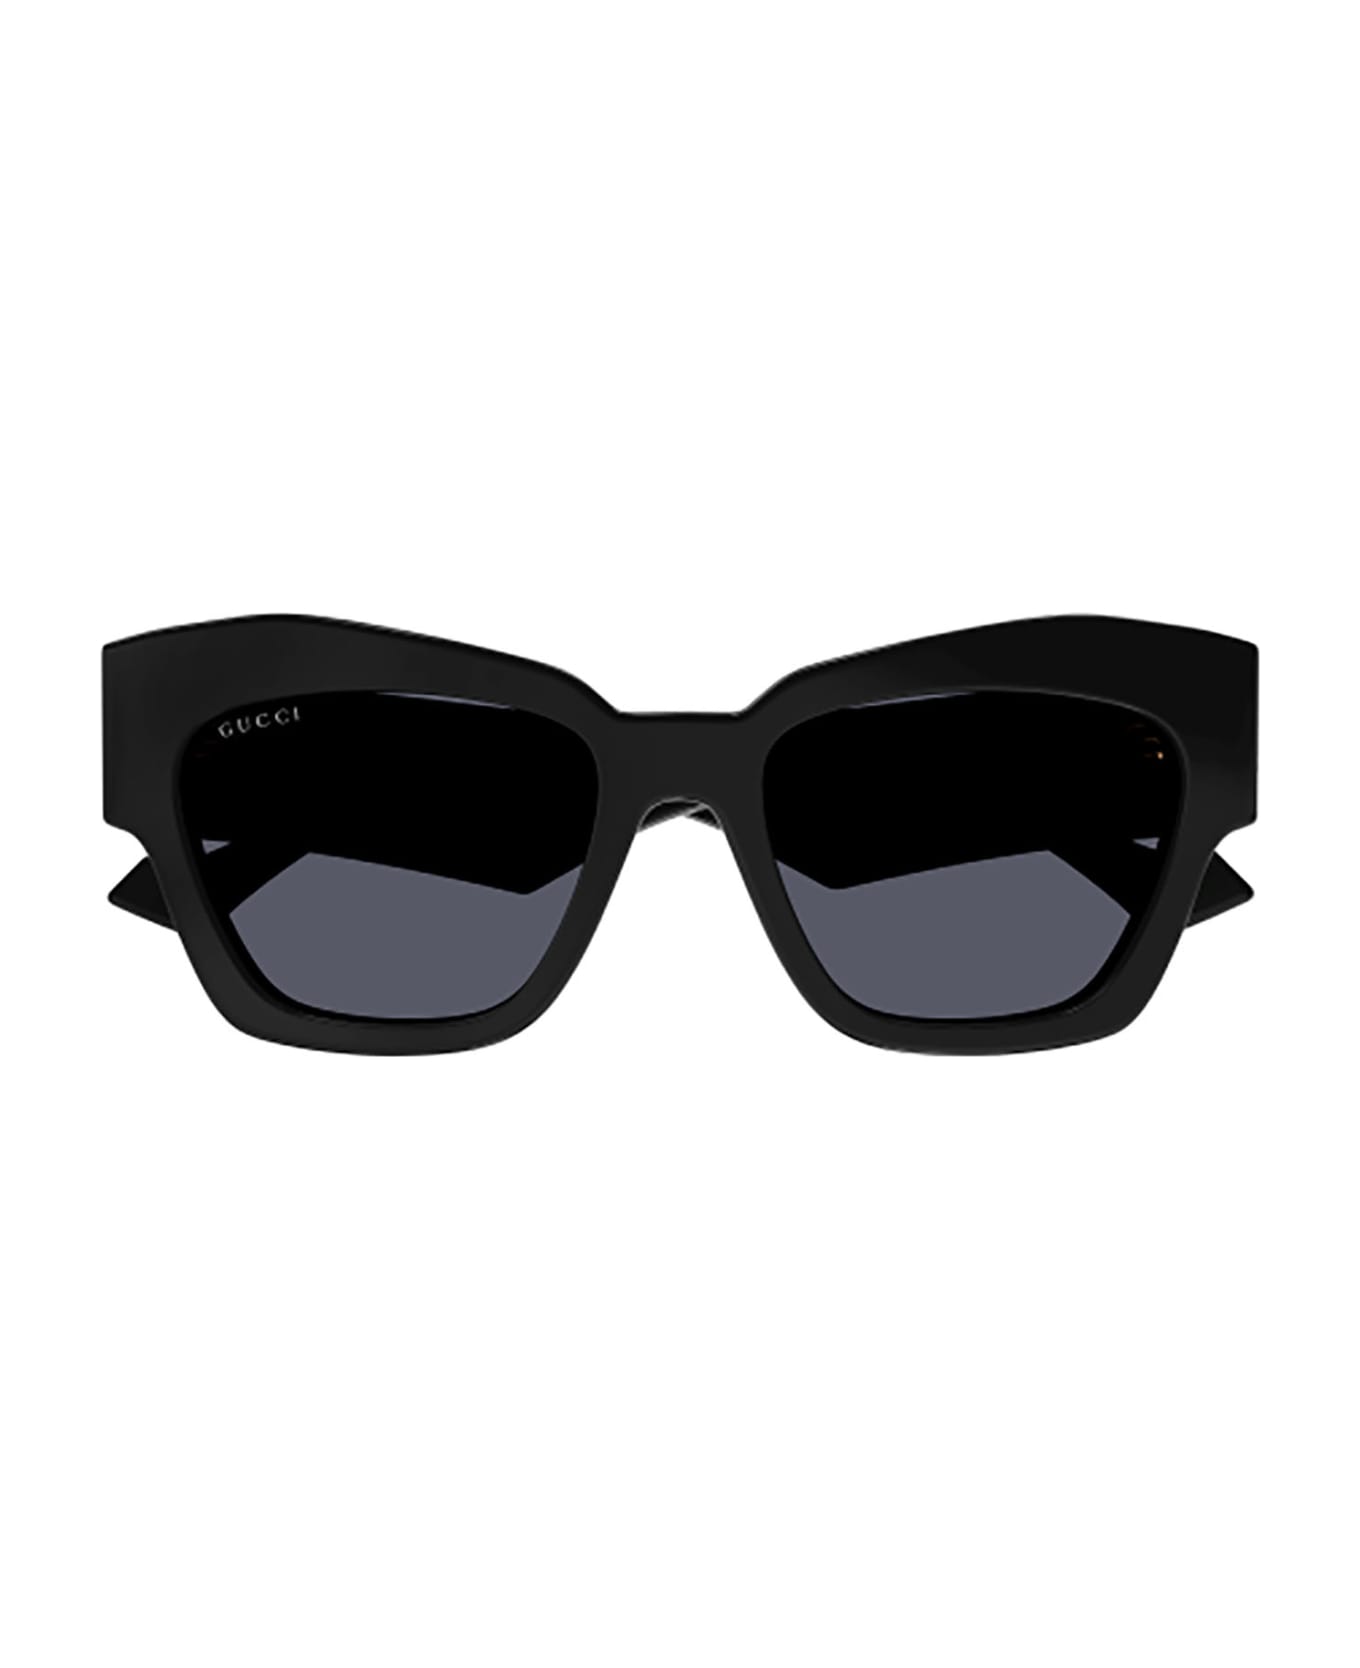 Gucci Eyewear GG1422S Sunglasses - Black Black Grey